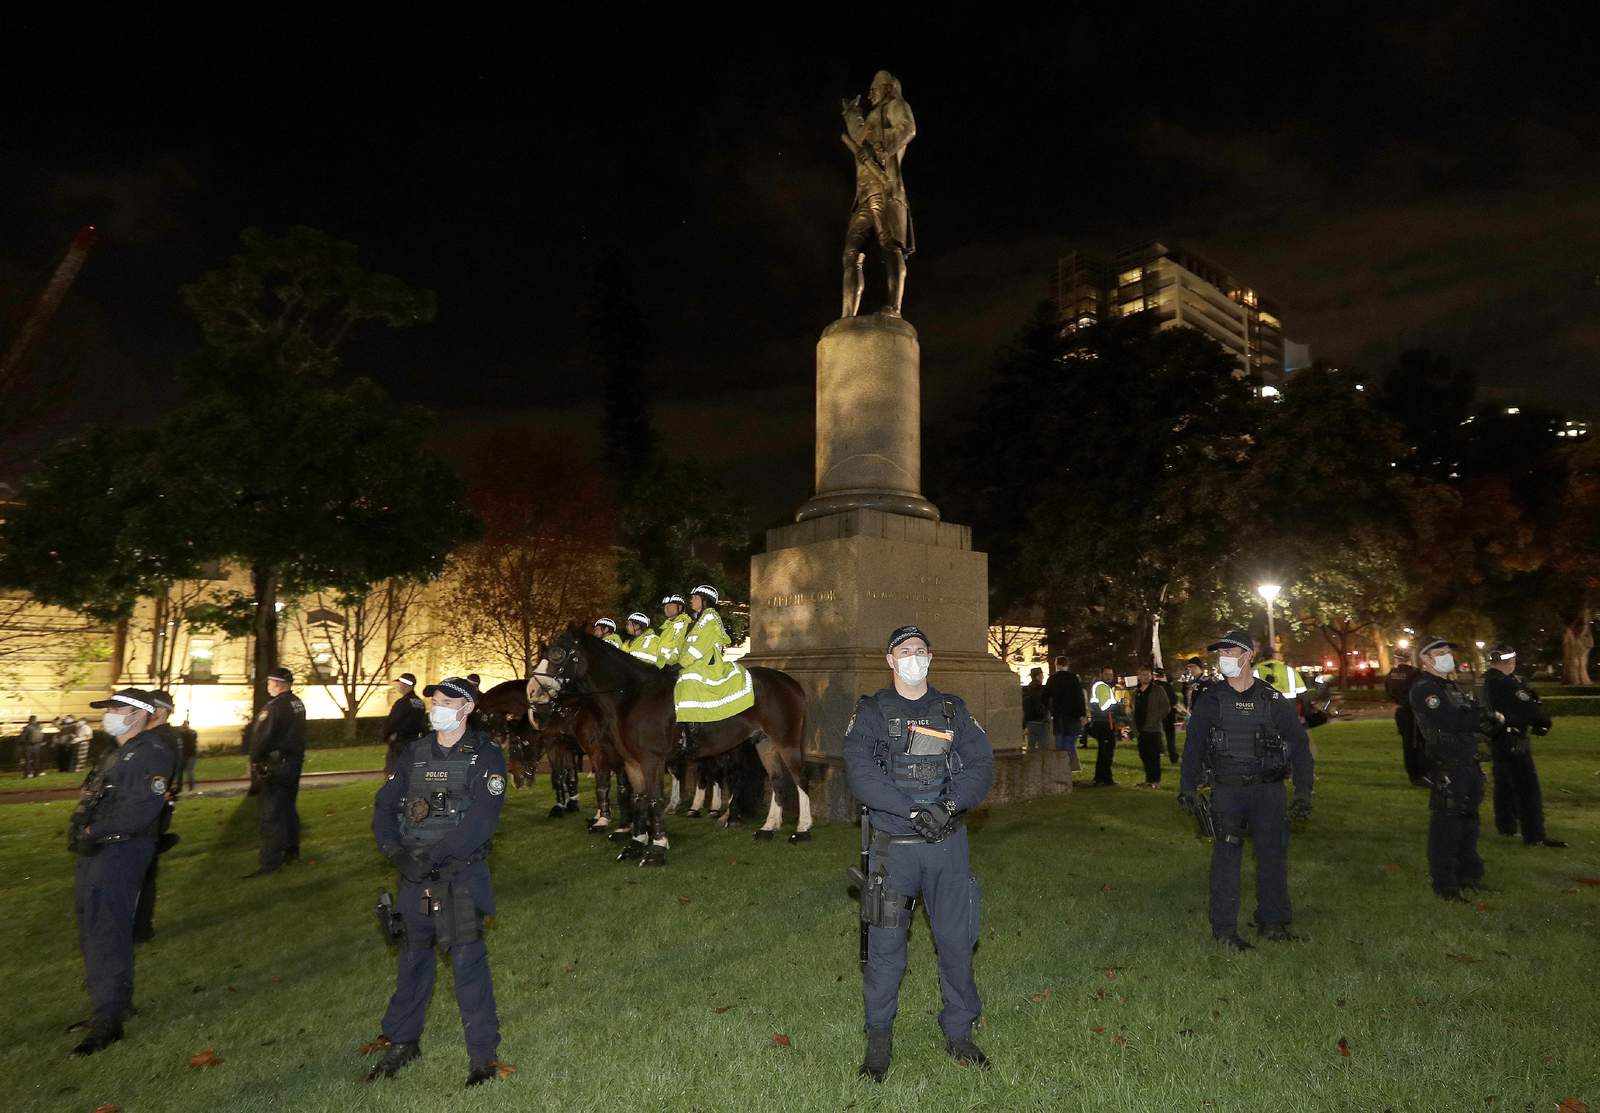 2 Sydney statues of British explorer James Cook vandalized